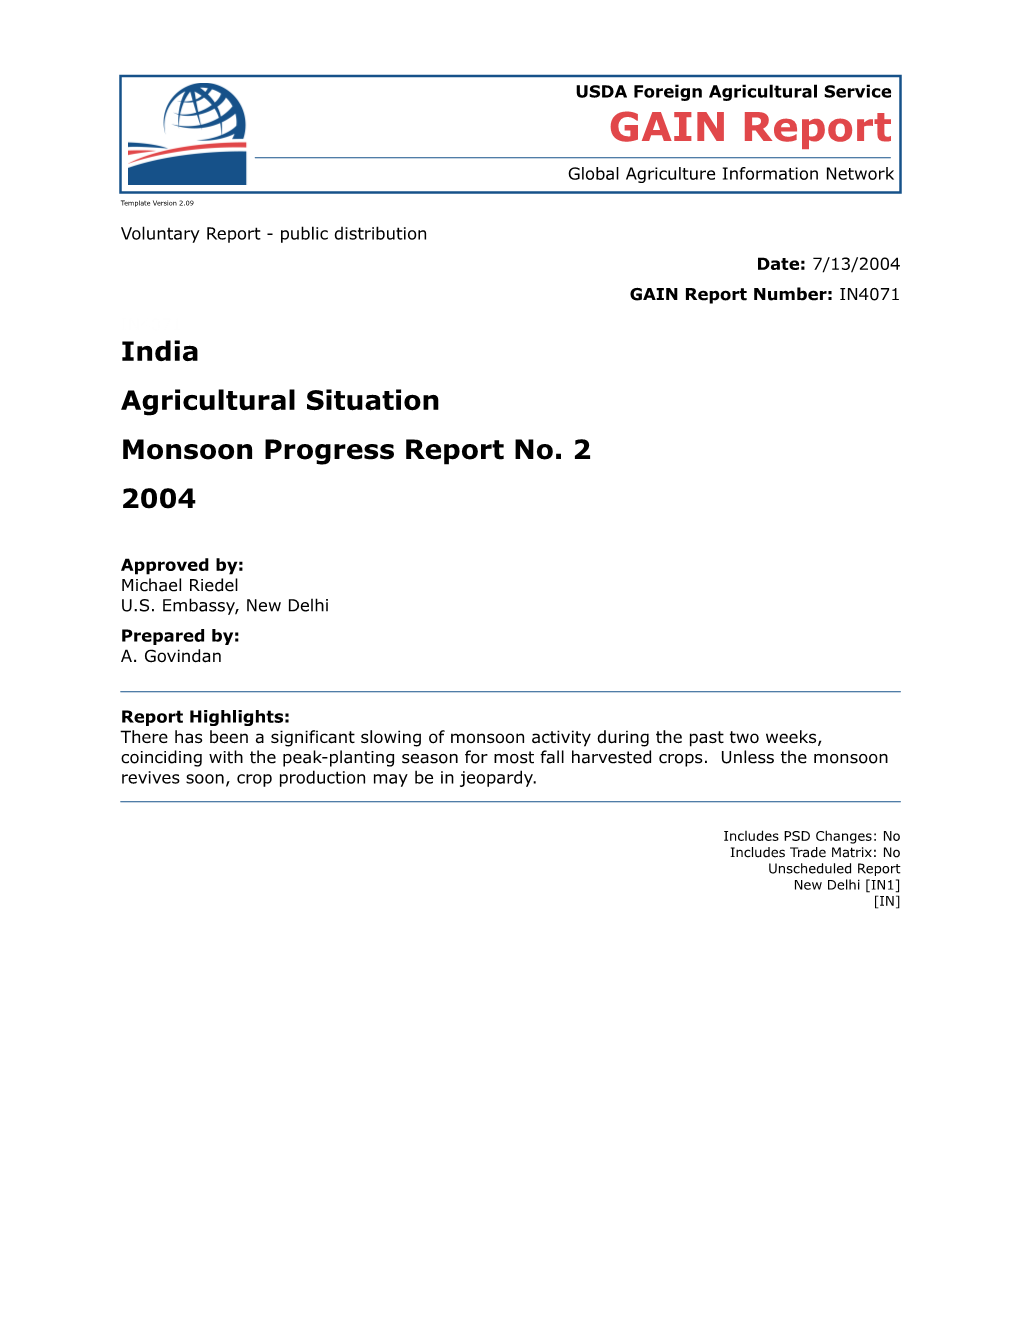 Voluntary Report - Public Distribution s23